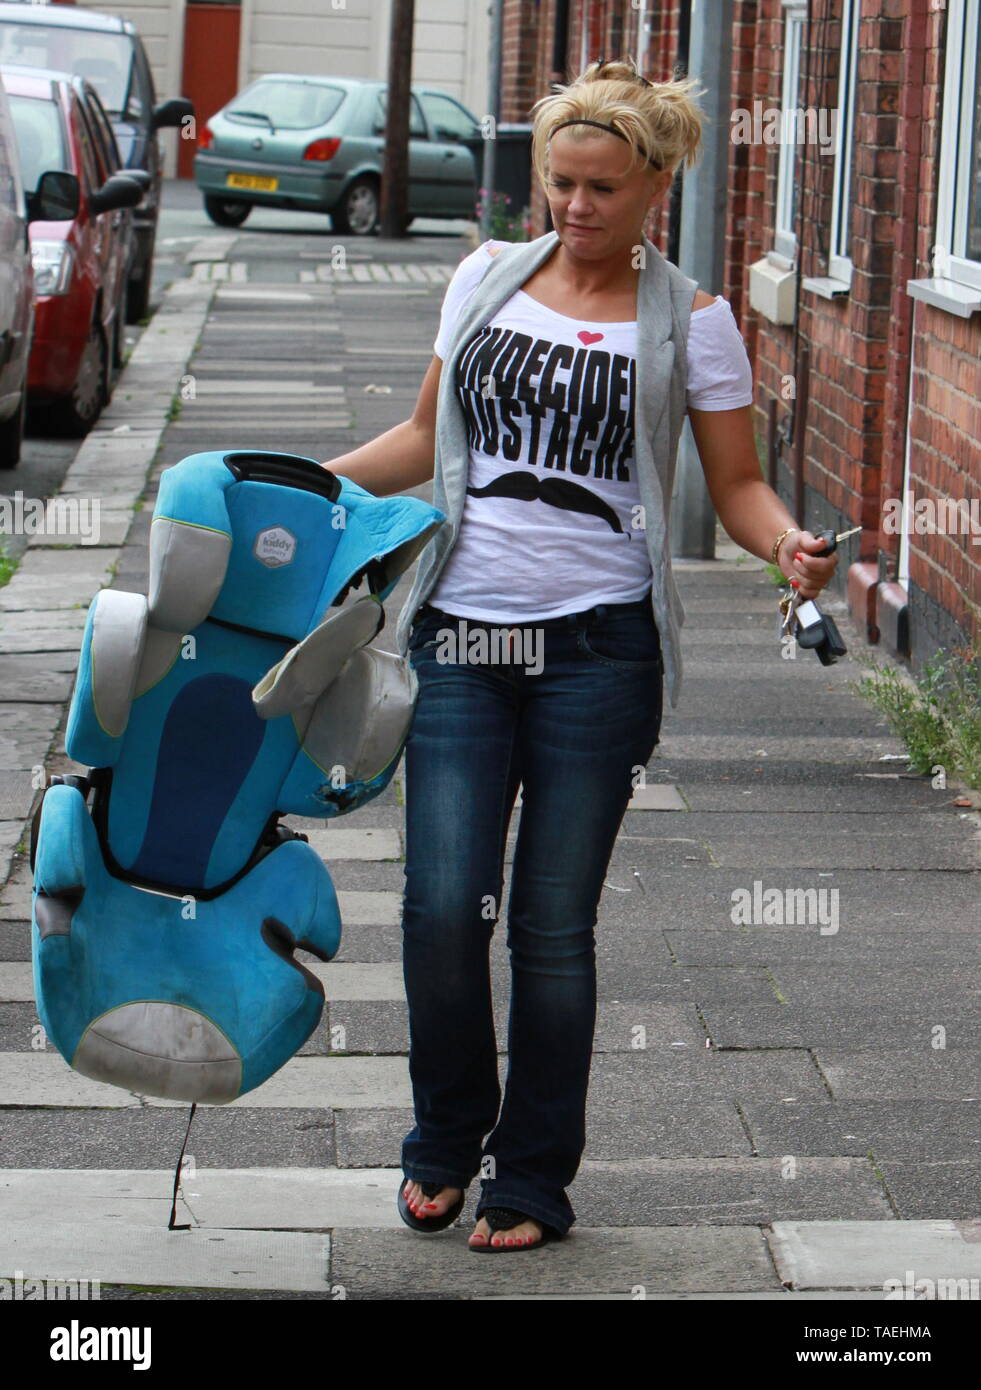 Kerry Katona seen outside her mothers home in Warrington credit Ian Fairbrother/Alamy Stock Photos Stock Photo